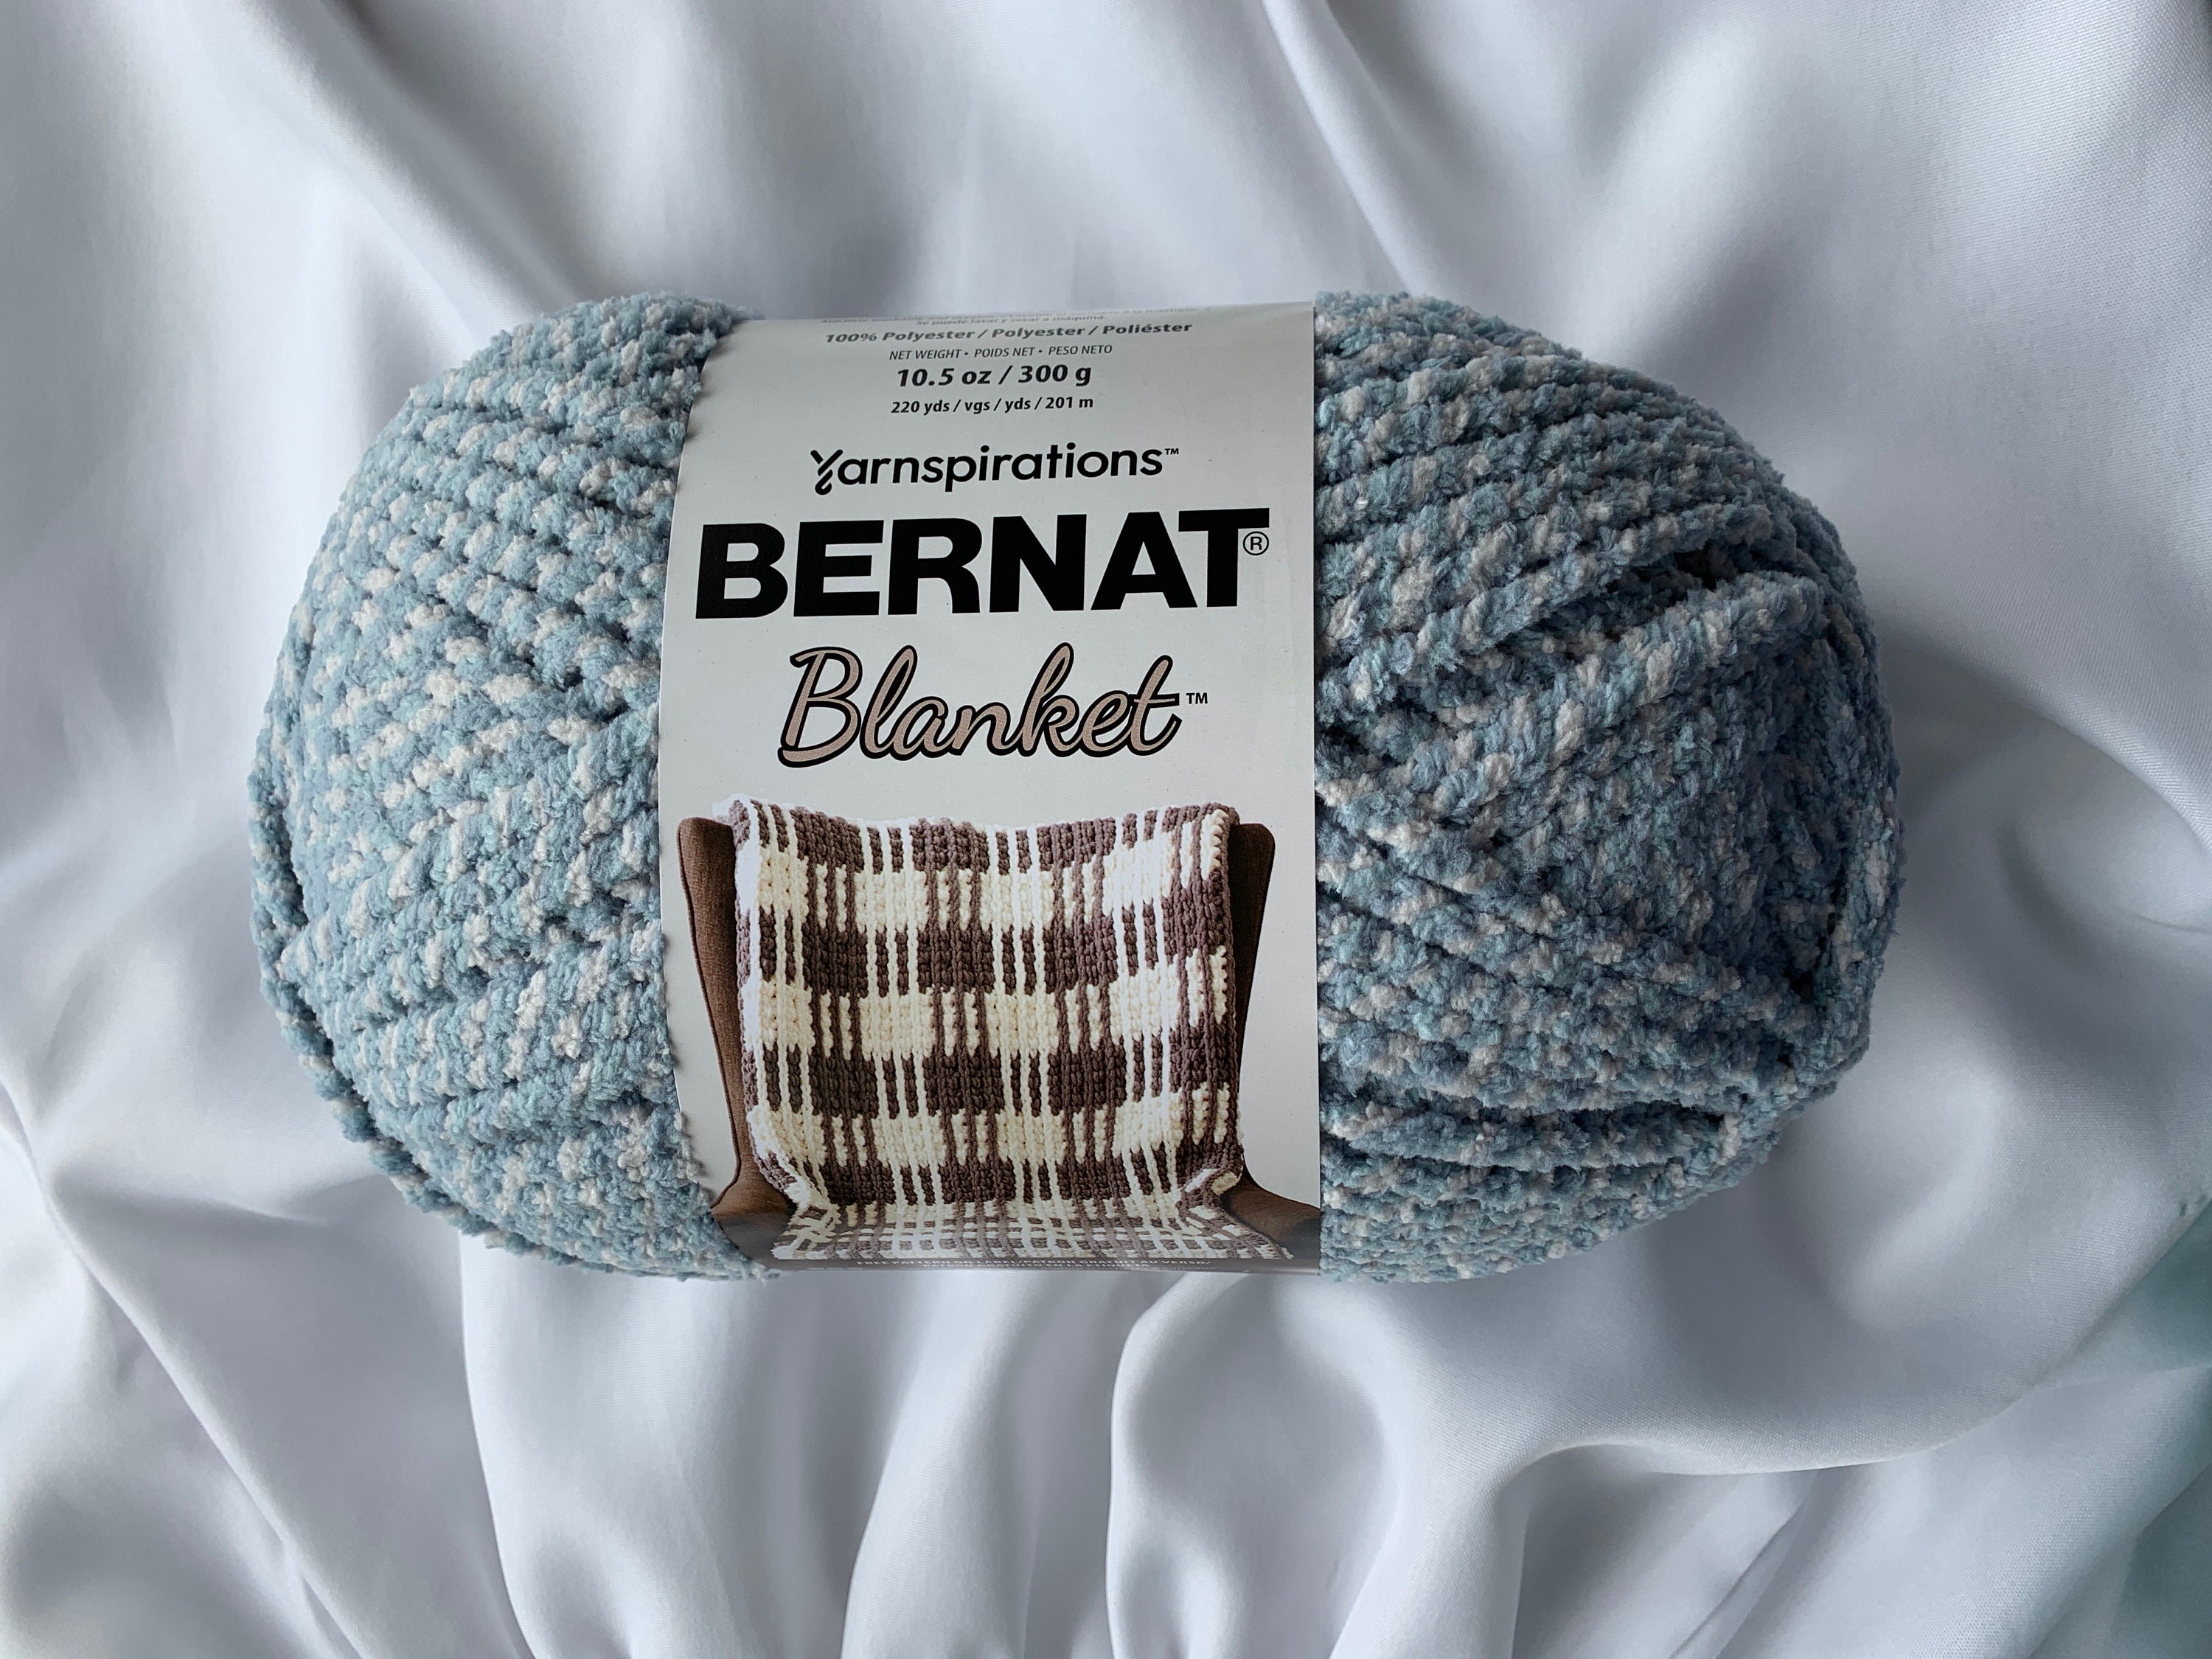 Bernat Blanket #6 Super Bulky Polyester Yarn, Mist 10.5oz/300g, 220 Yards (4 Pack)